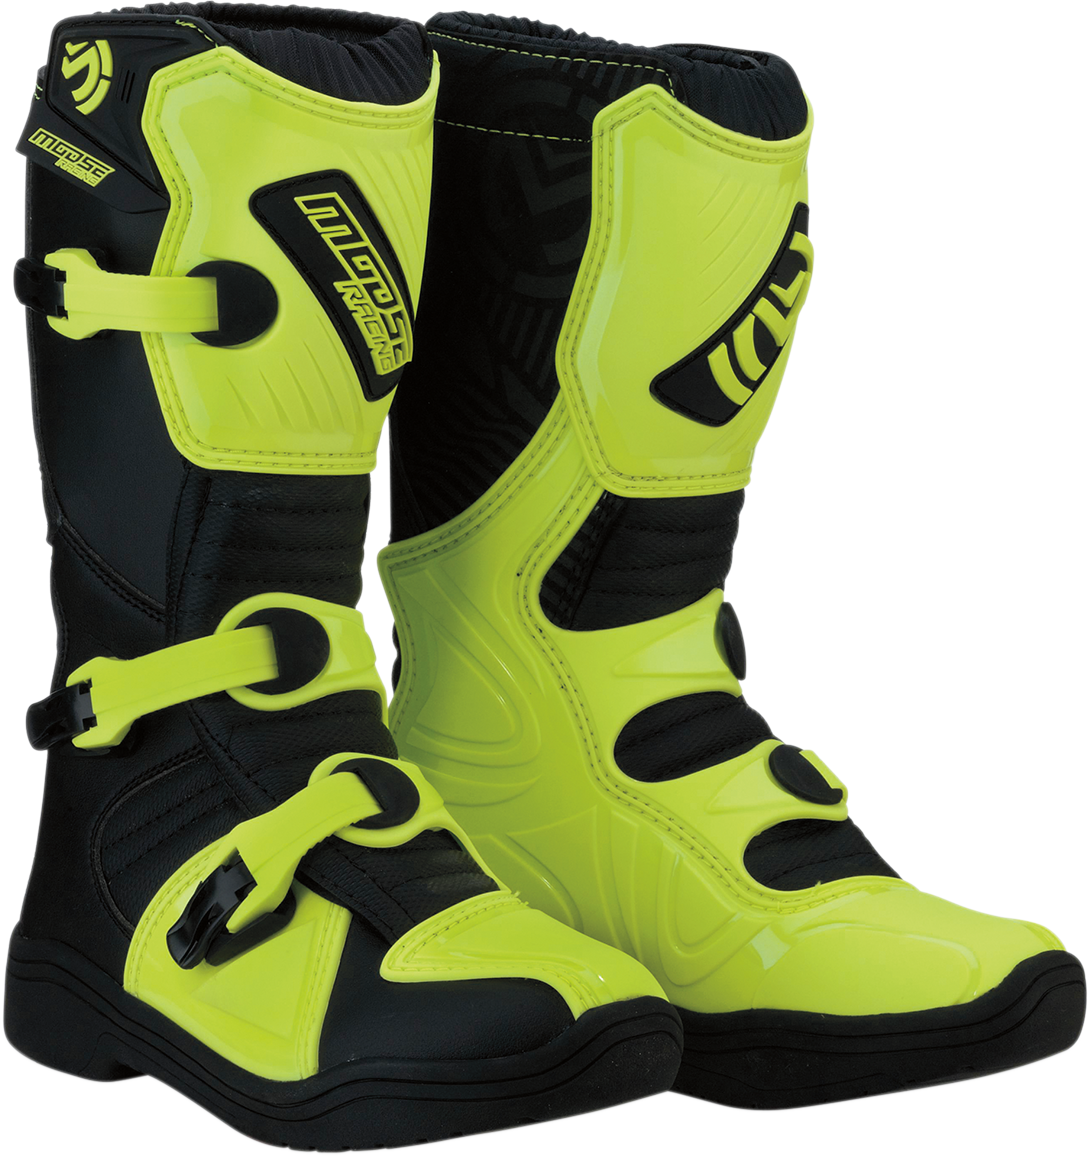 MOOSE RACING M1.3 Boots - Black/Hi-Viz Yellow - Size 1 3411-0444